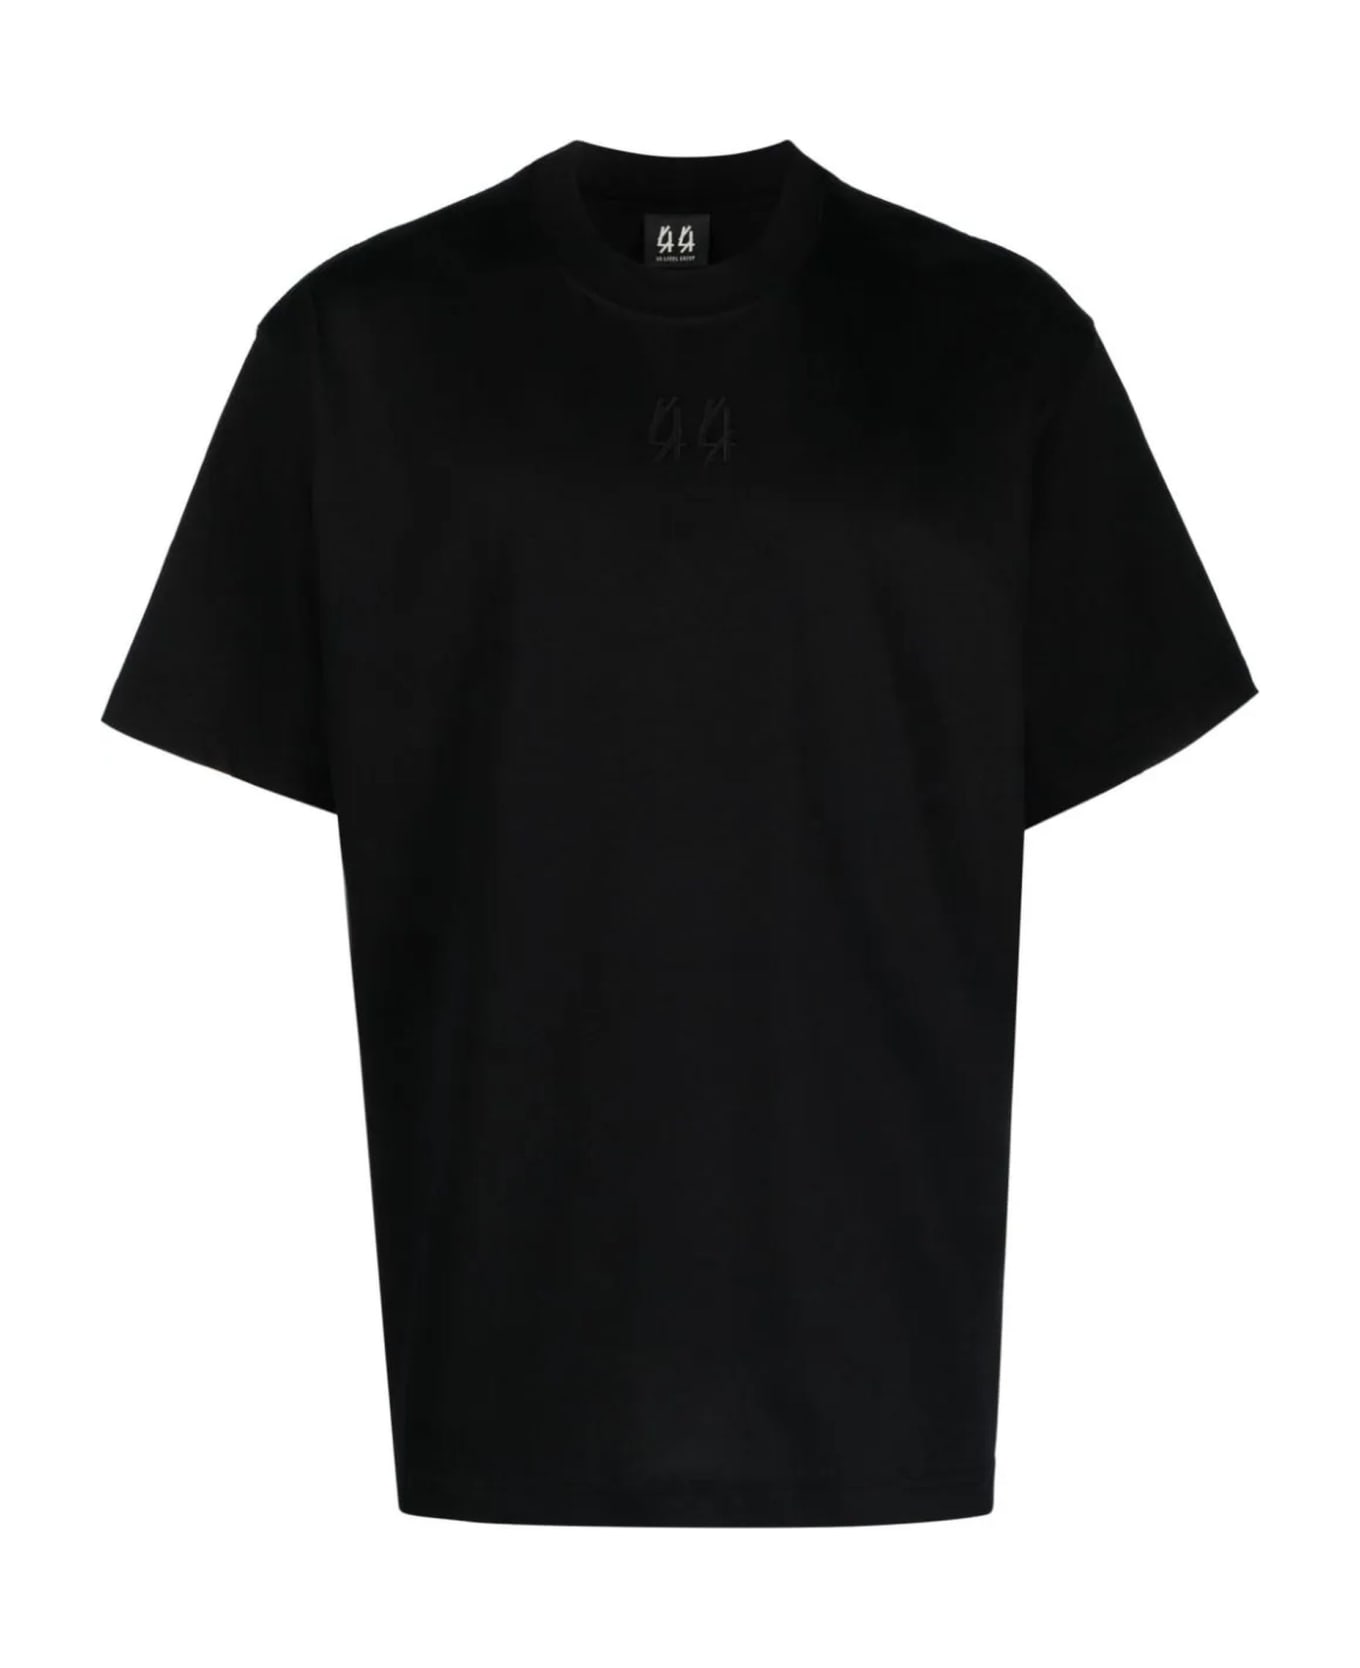 44 Label Group Black Cotton T-shirt - Black+the enemy print